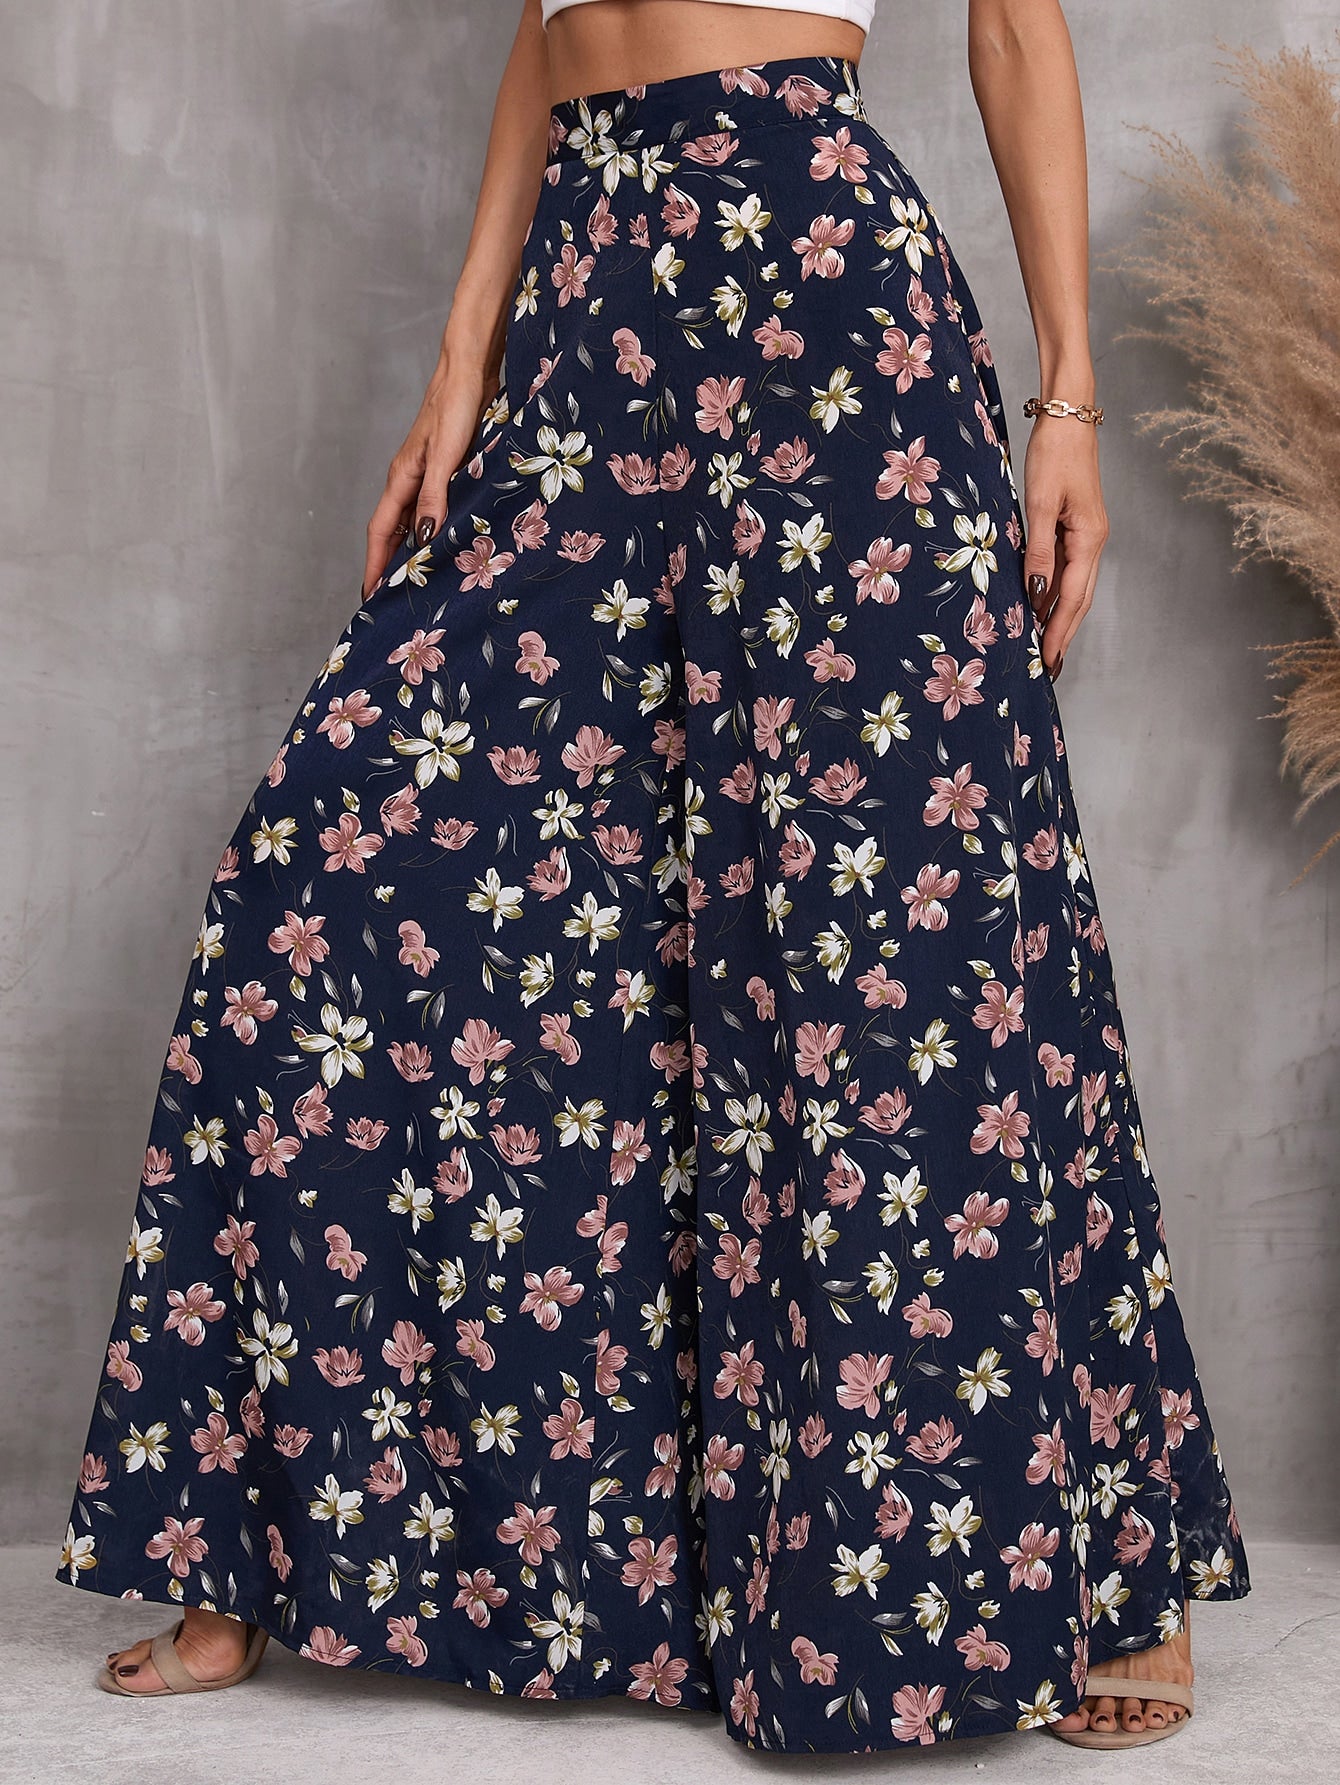 Women's Pants High Waist, Sarouel Ample Floral Pattern, Elastic Belt Pants,  Tailor Floral Pants at Rs 550/piece, हाई वेस्टेड पैंट in Jaipur